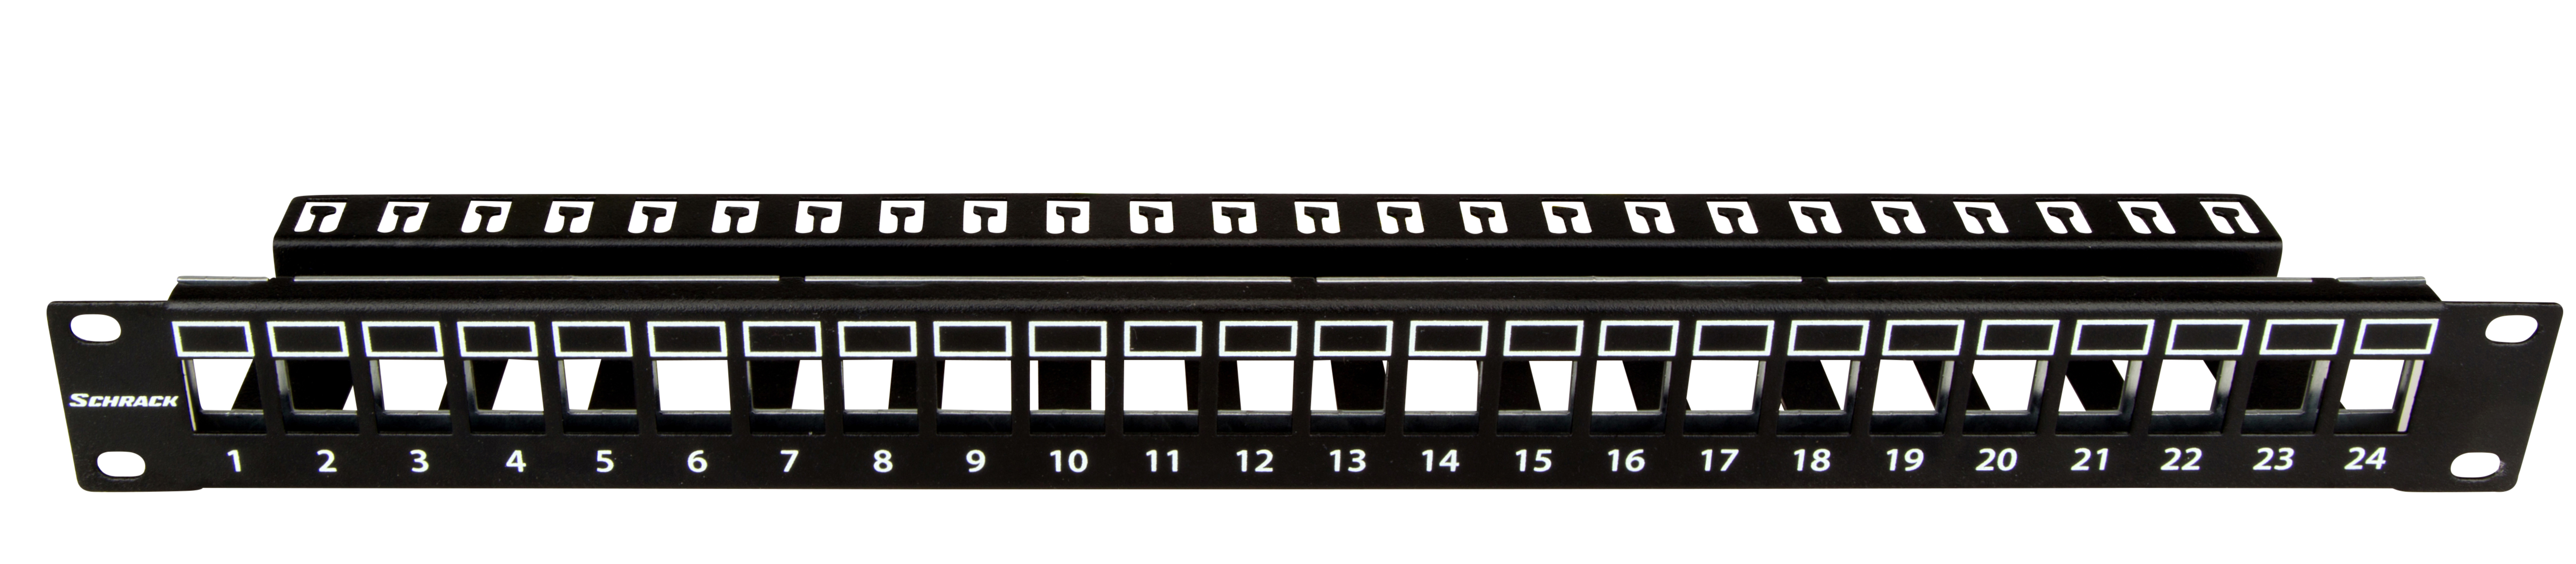 Patchpanel 19" leer für 24 Module (SFA)(SFB), 1HE, RAL9005